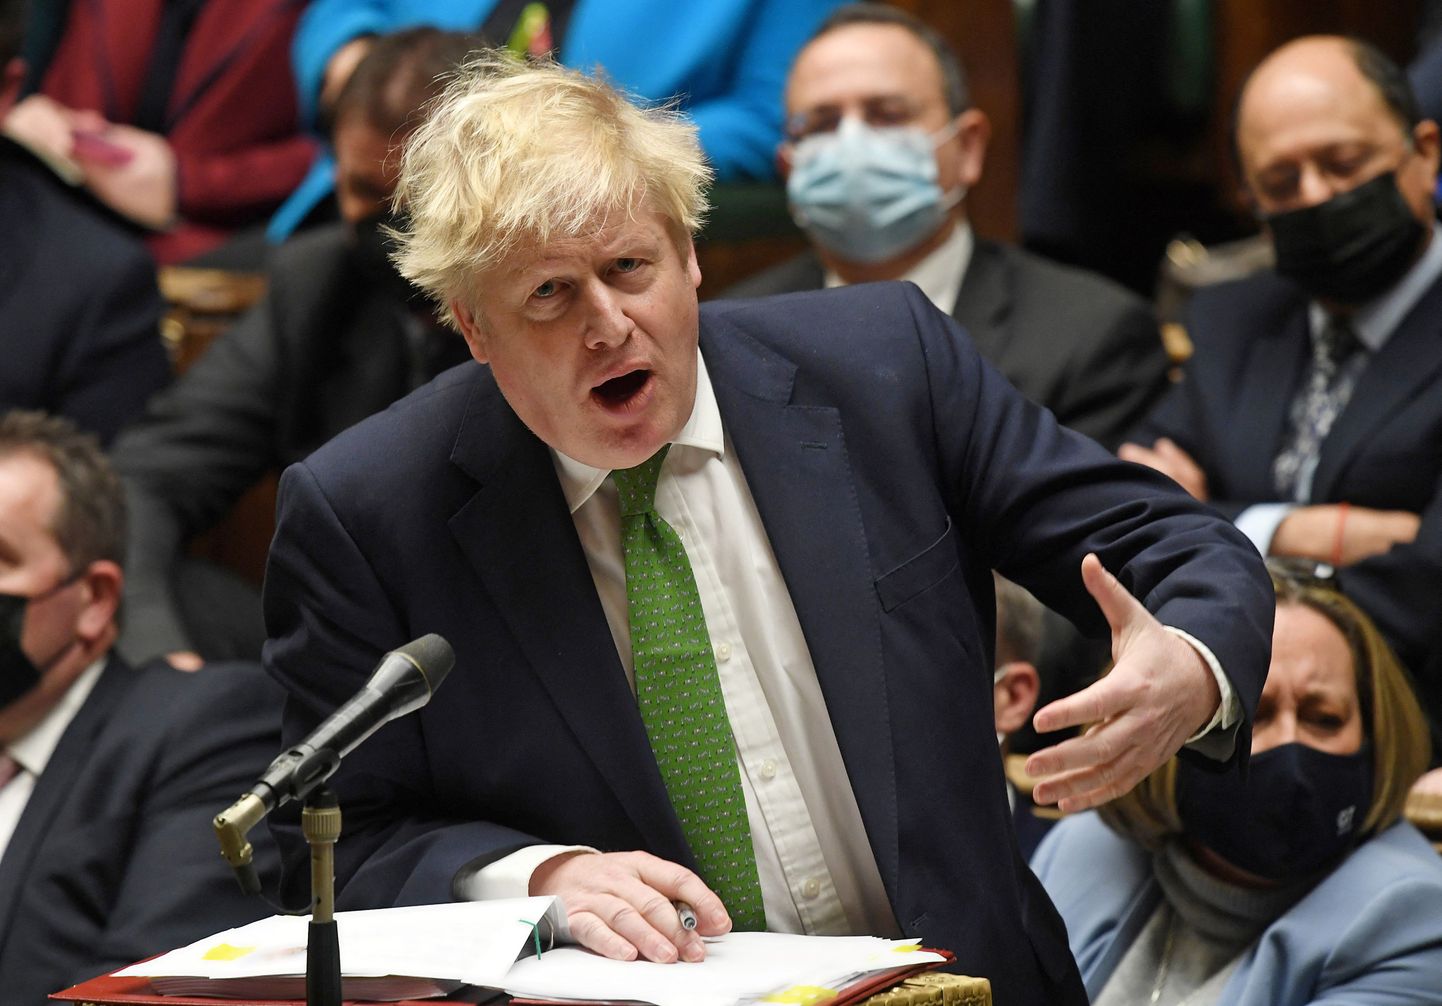 Briti peaminister Boris Johnson parlamendis.